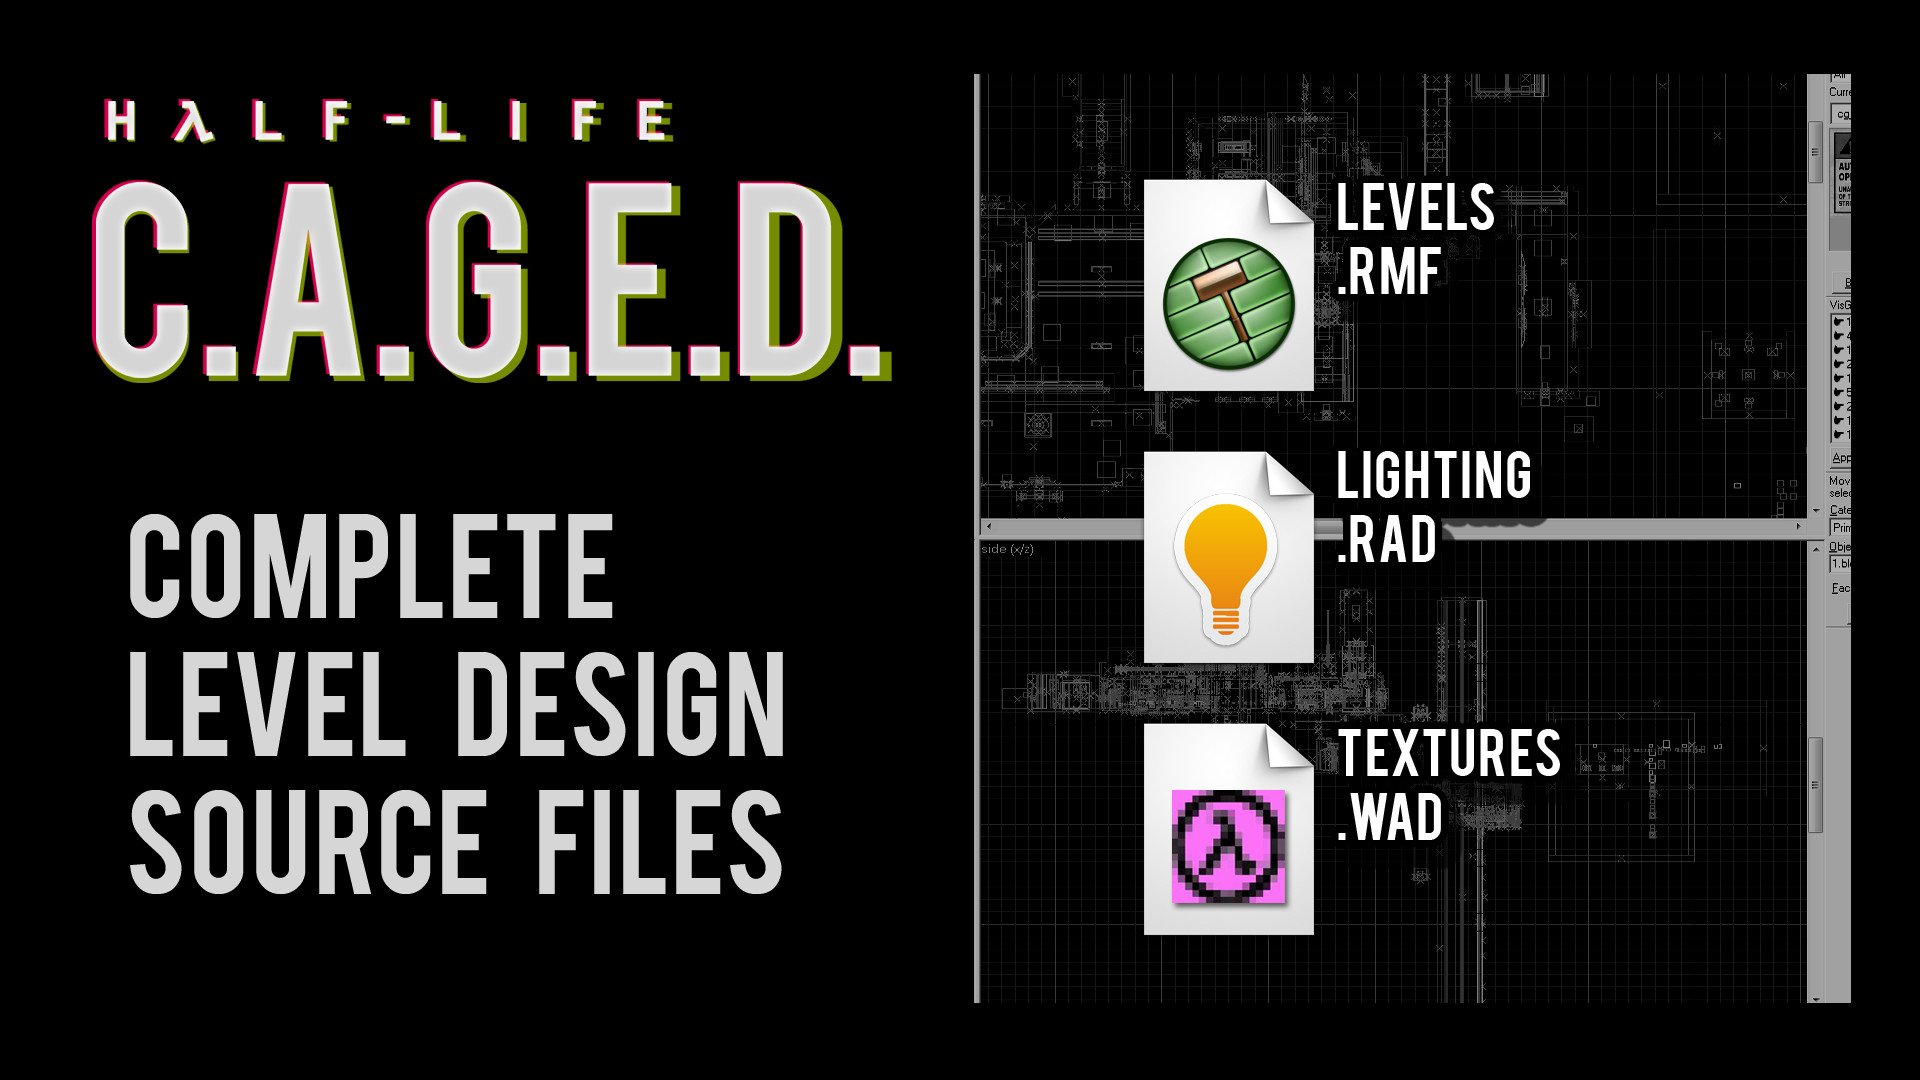 Half-Life: C.A.G.E.D. - Level Design Source Files Featured Screenshot #1